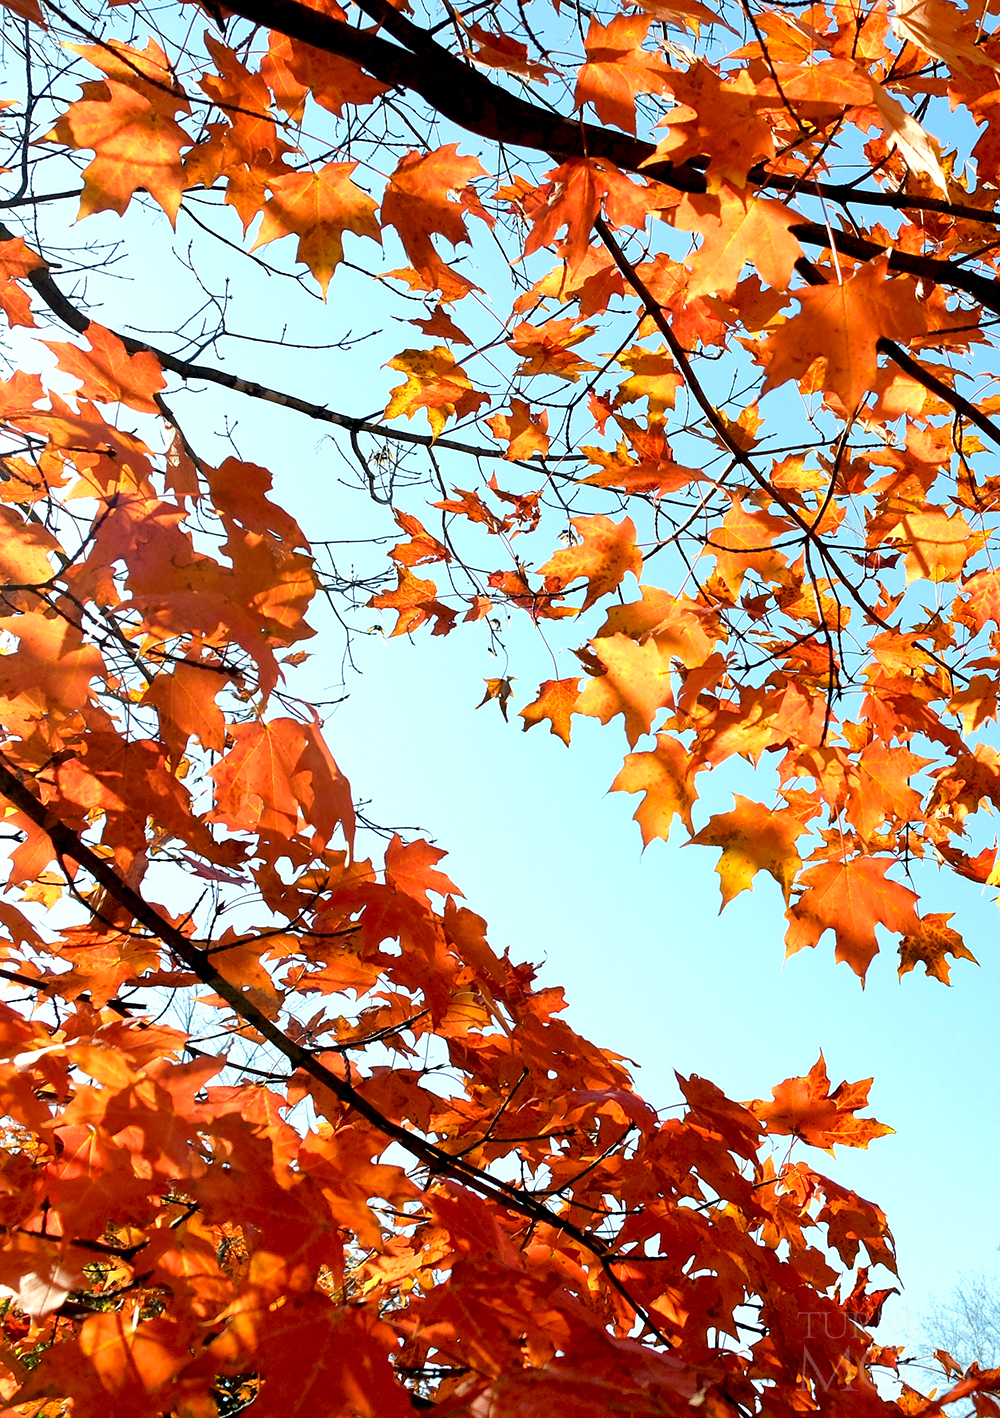 Chicago Botanic Gardens - Maple Tree - Komorebi - Fall Colors